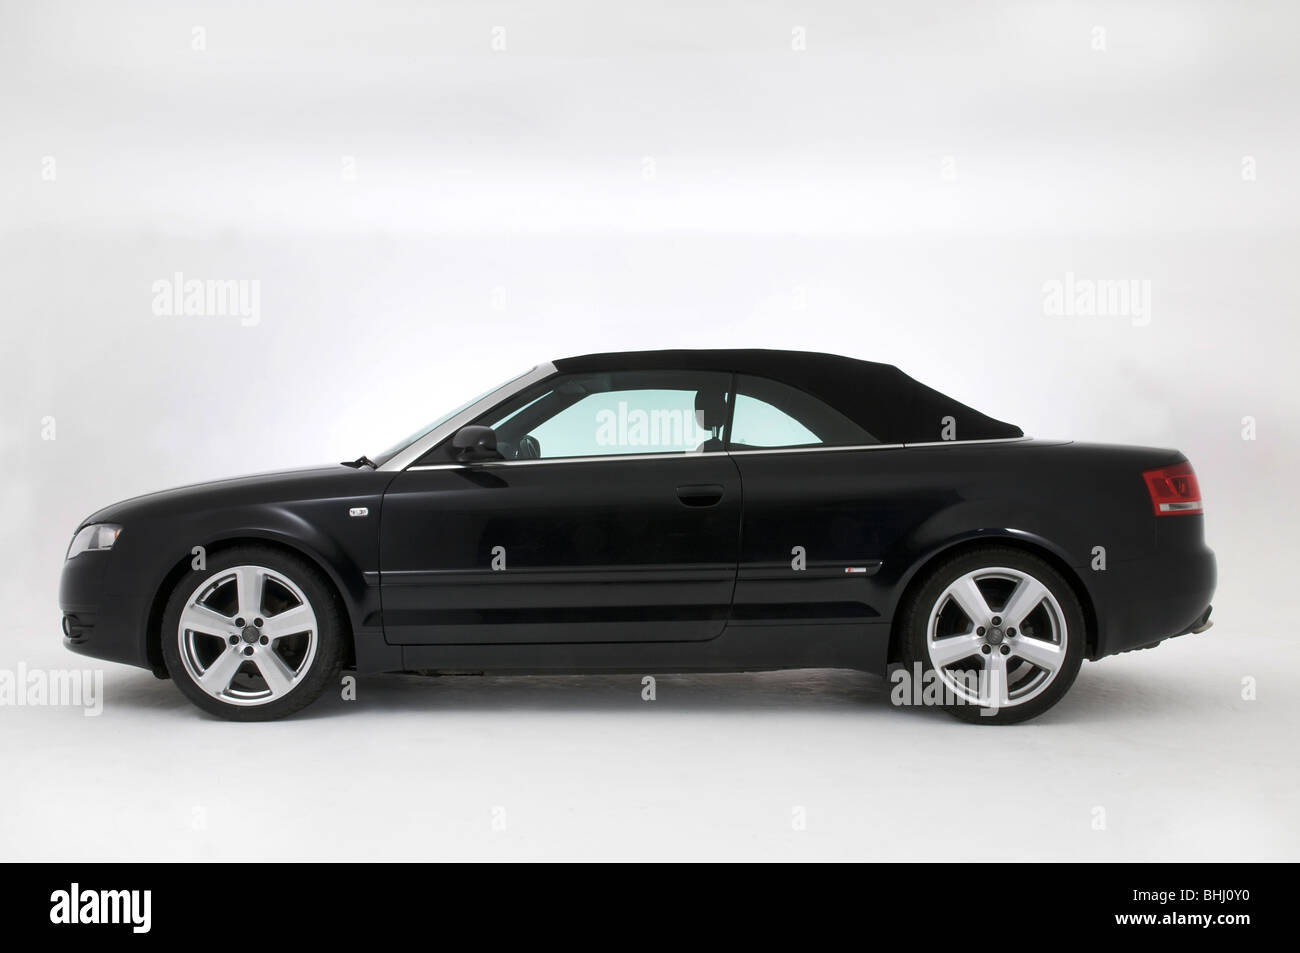 Car Audi A4 2 0 Tdi Stockfotos und -bilder Kaufen - Alamy